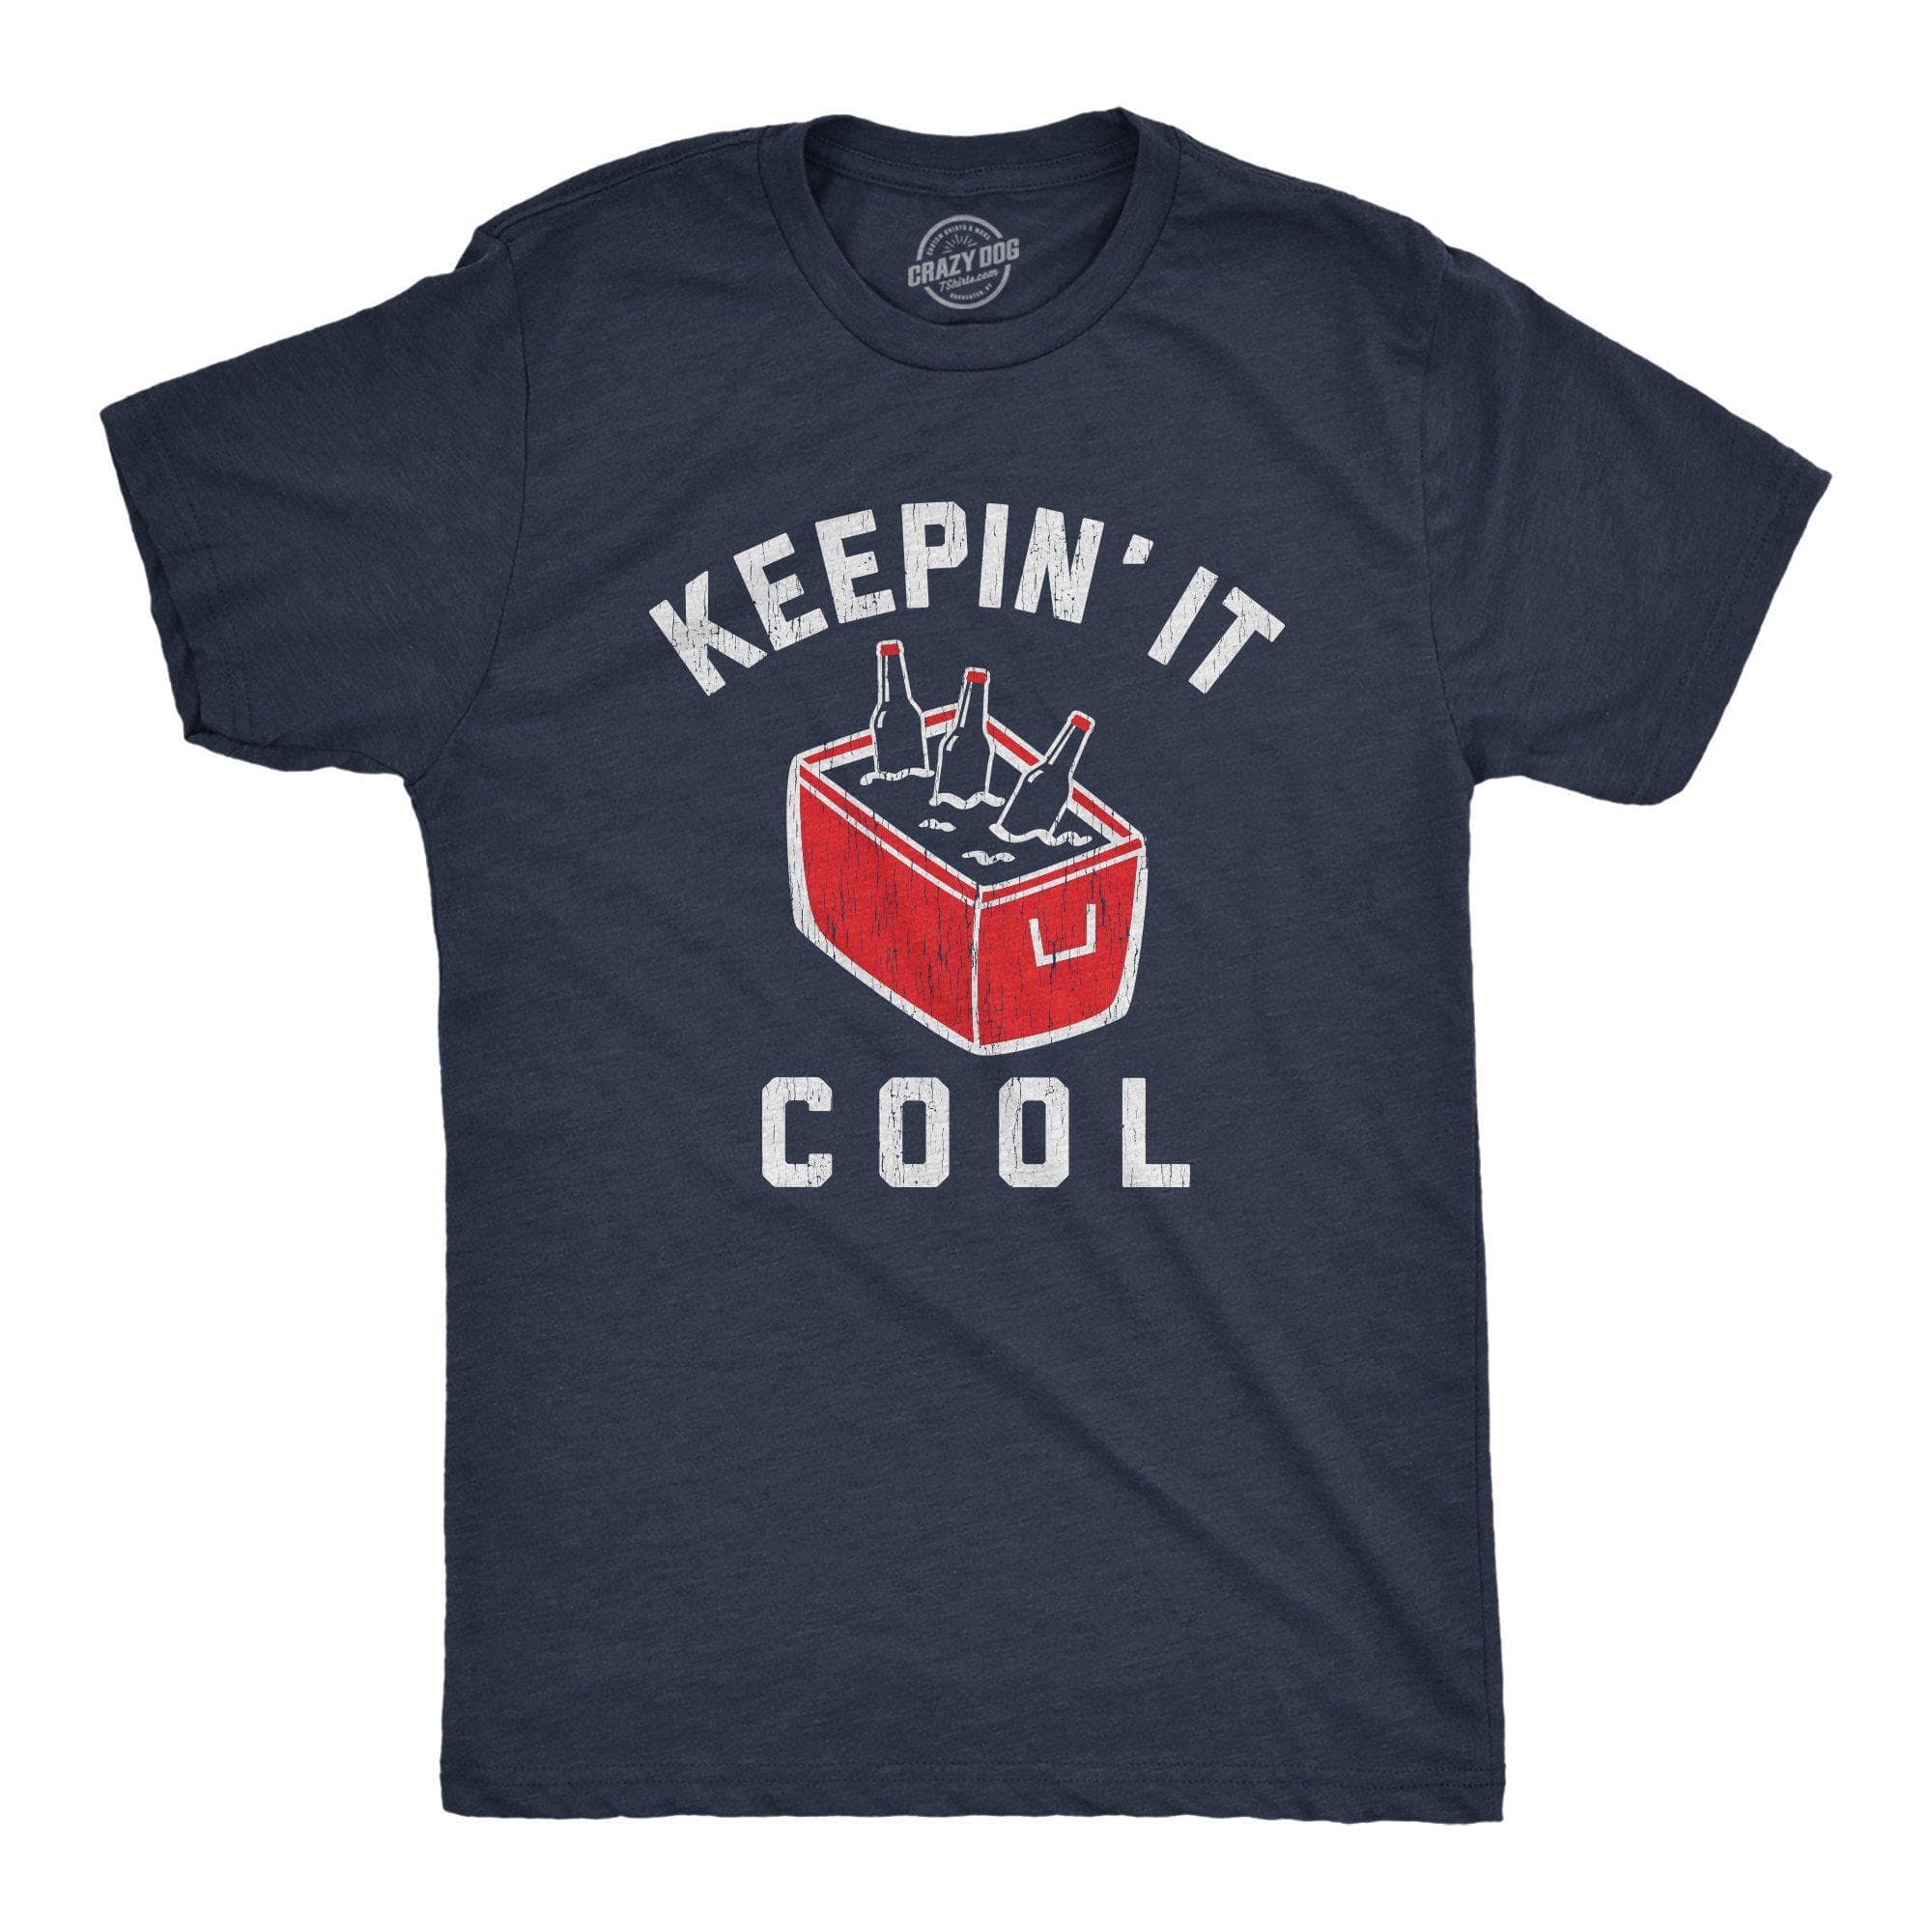 Keepin' It Cool Men's Tshirt - Crazy Dog T-Shirts